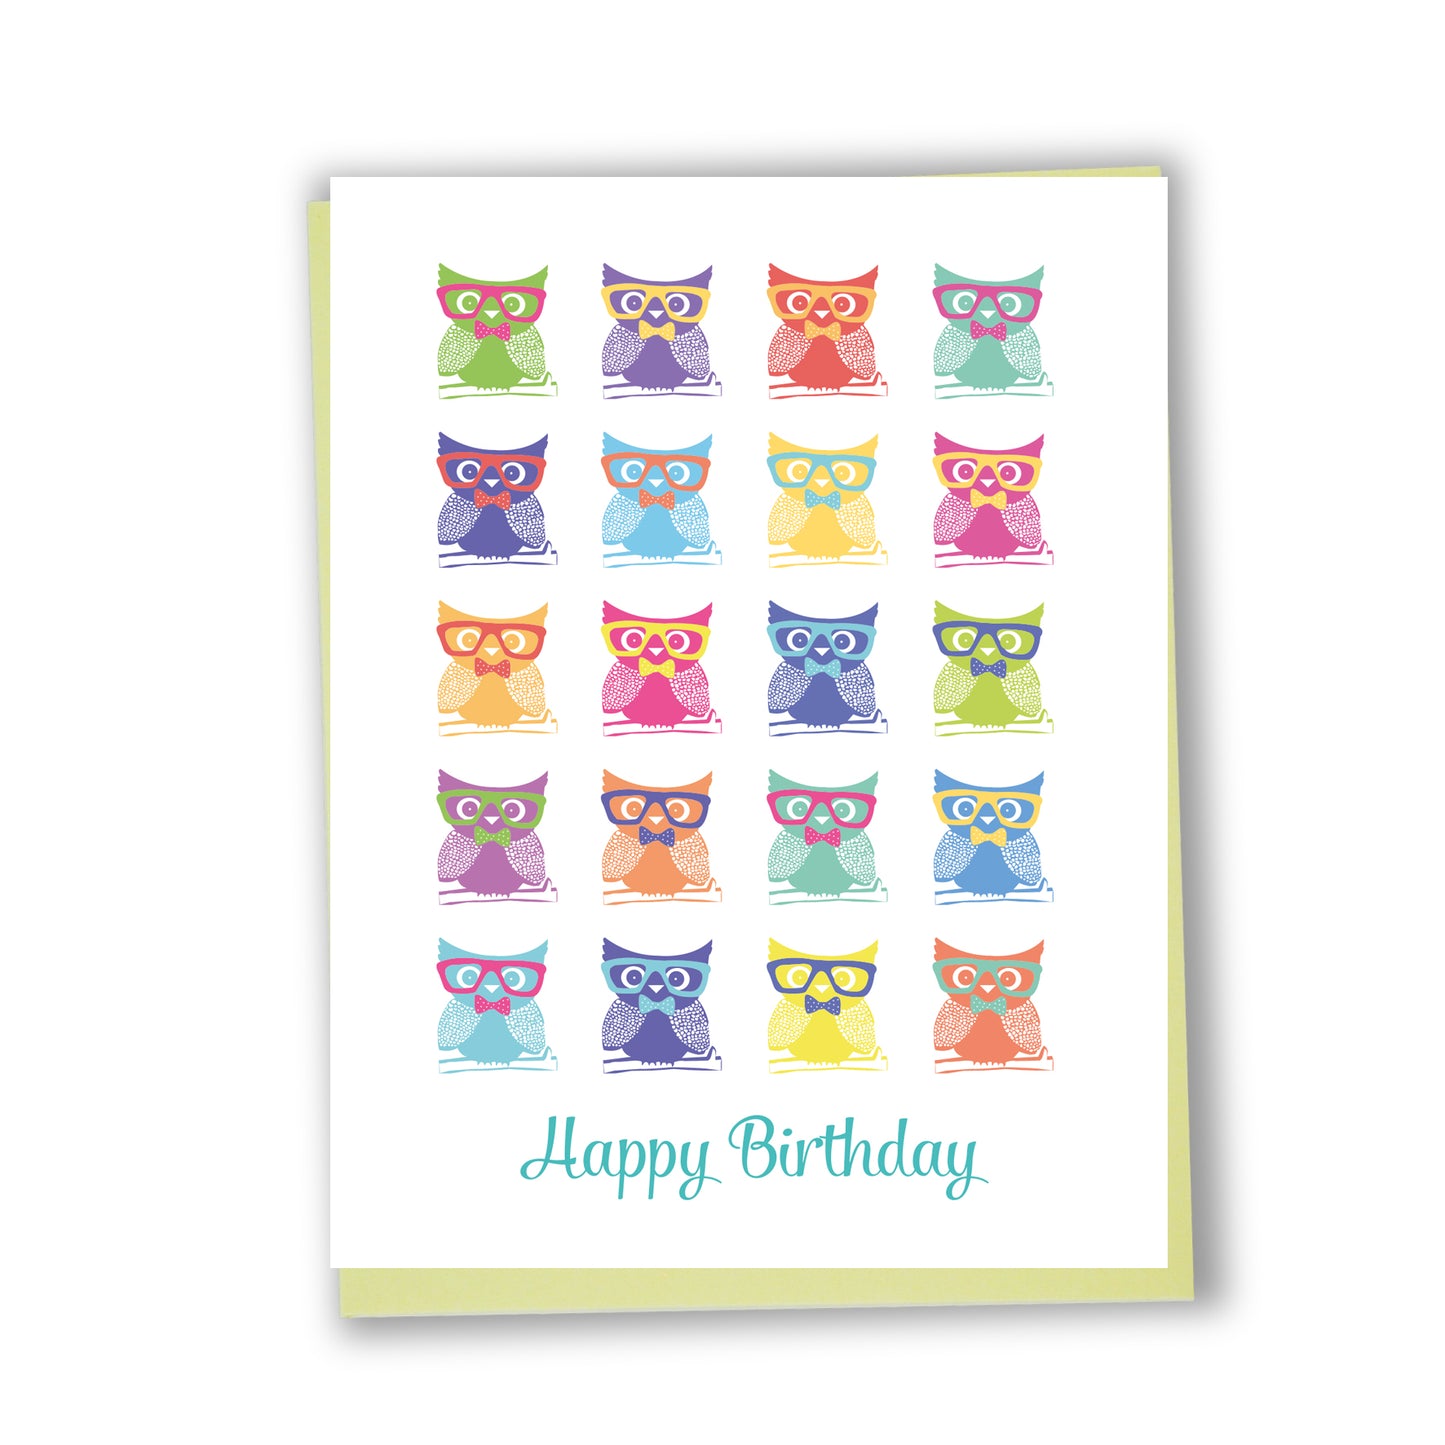 Happy birthday - owl